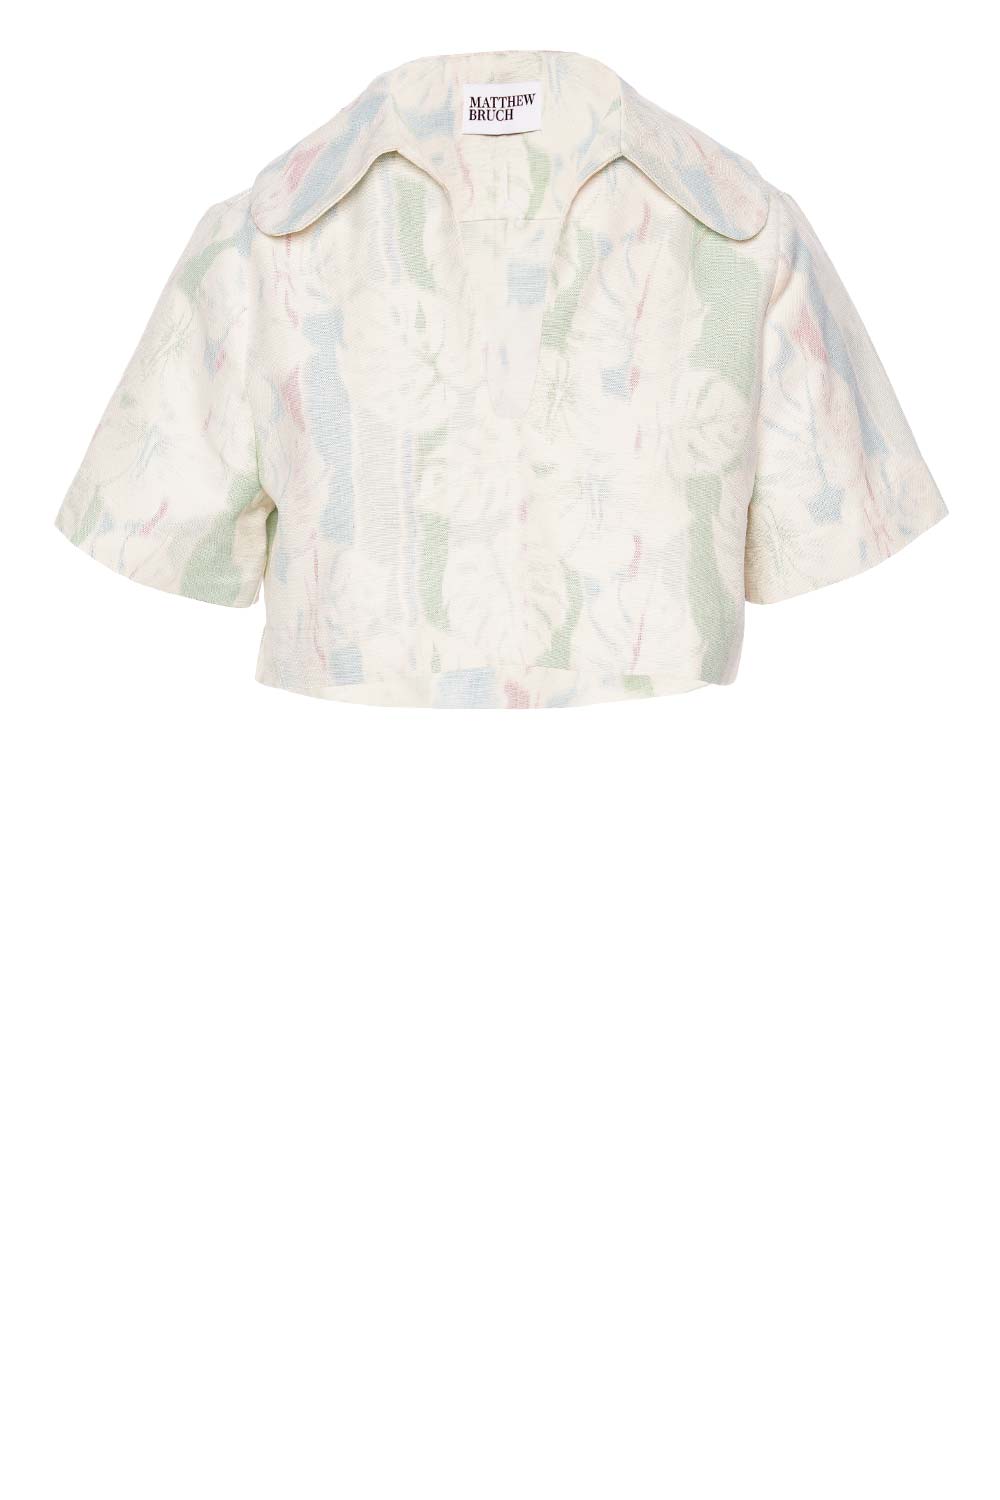 Matthew Bruch Tropical Printed Denim Popover Shirt